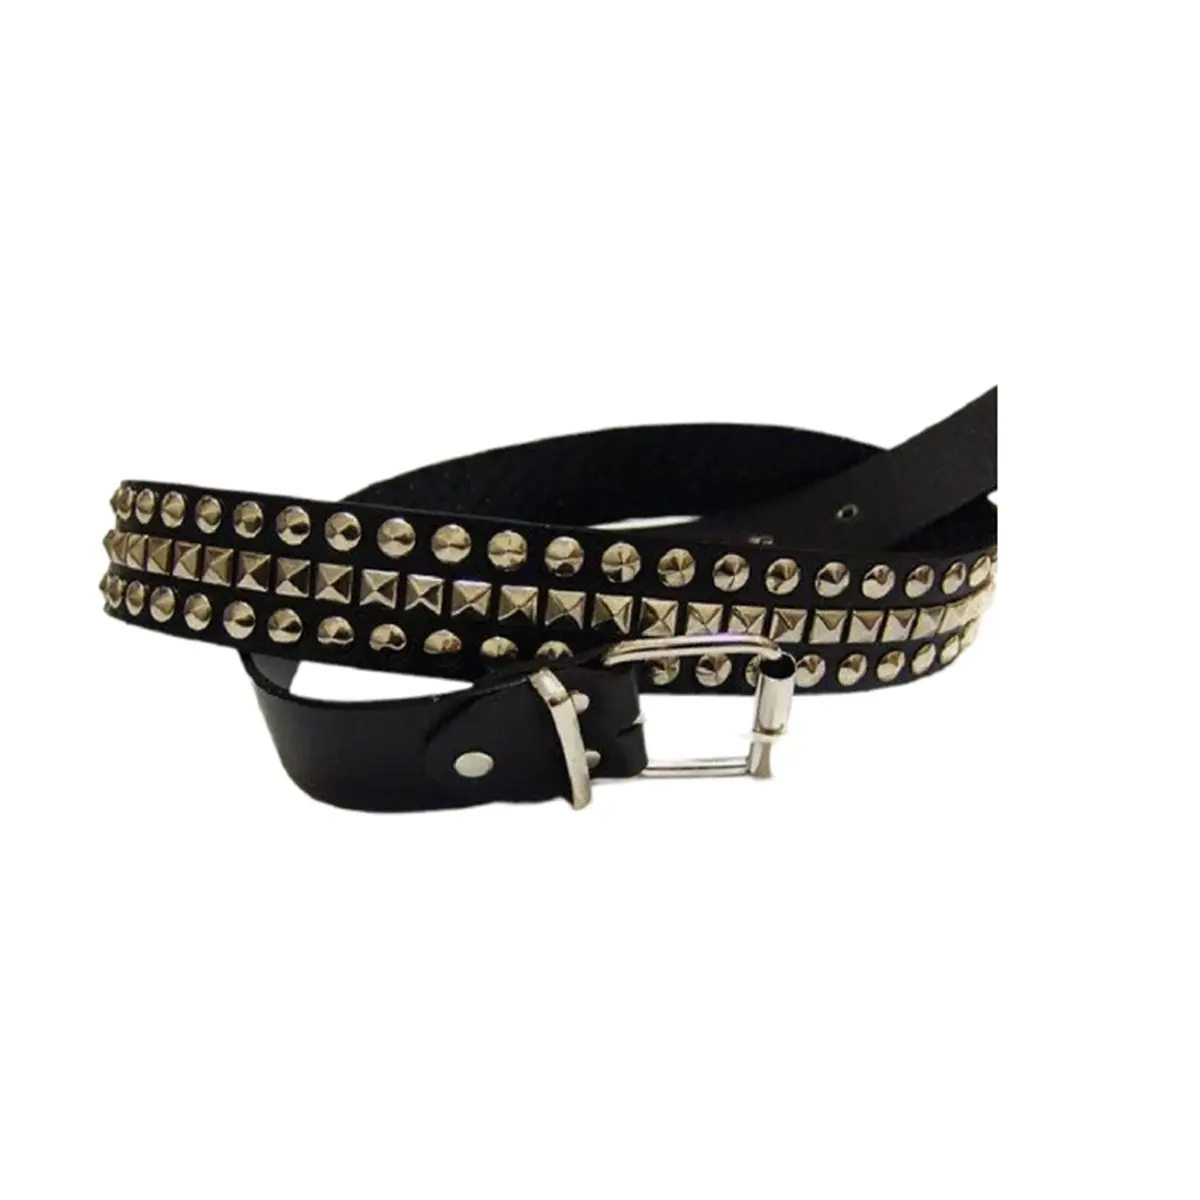 Buy Silver Pyramid Belt Black Leather - LeatherBeltsOnline.com